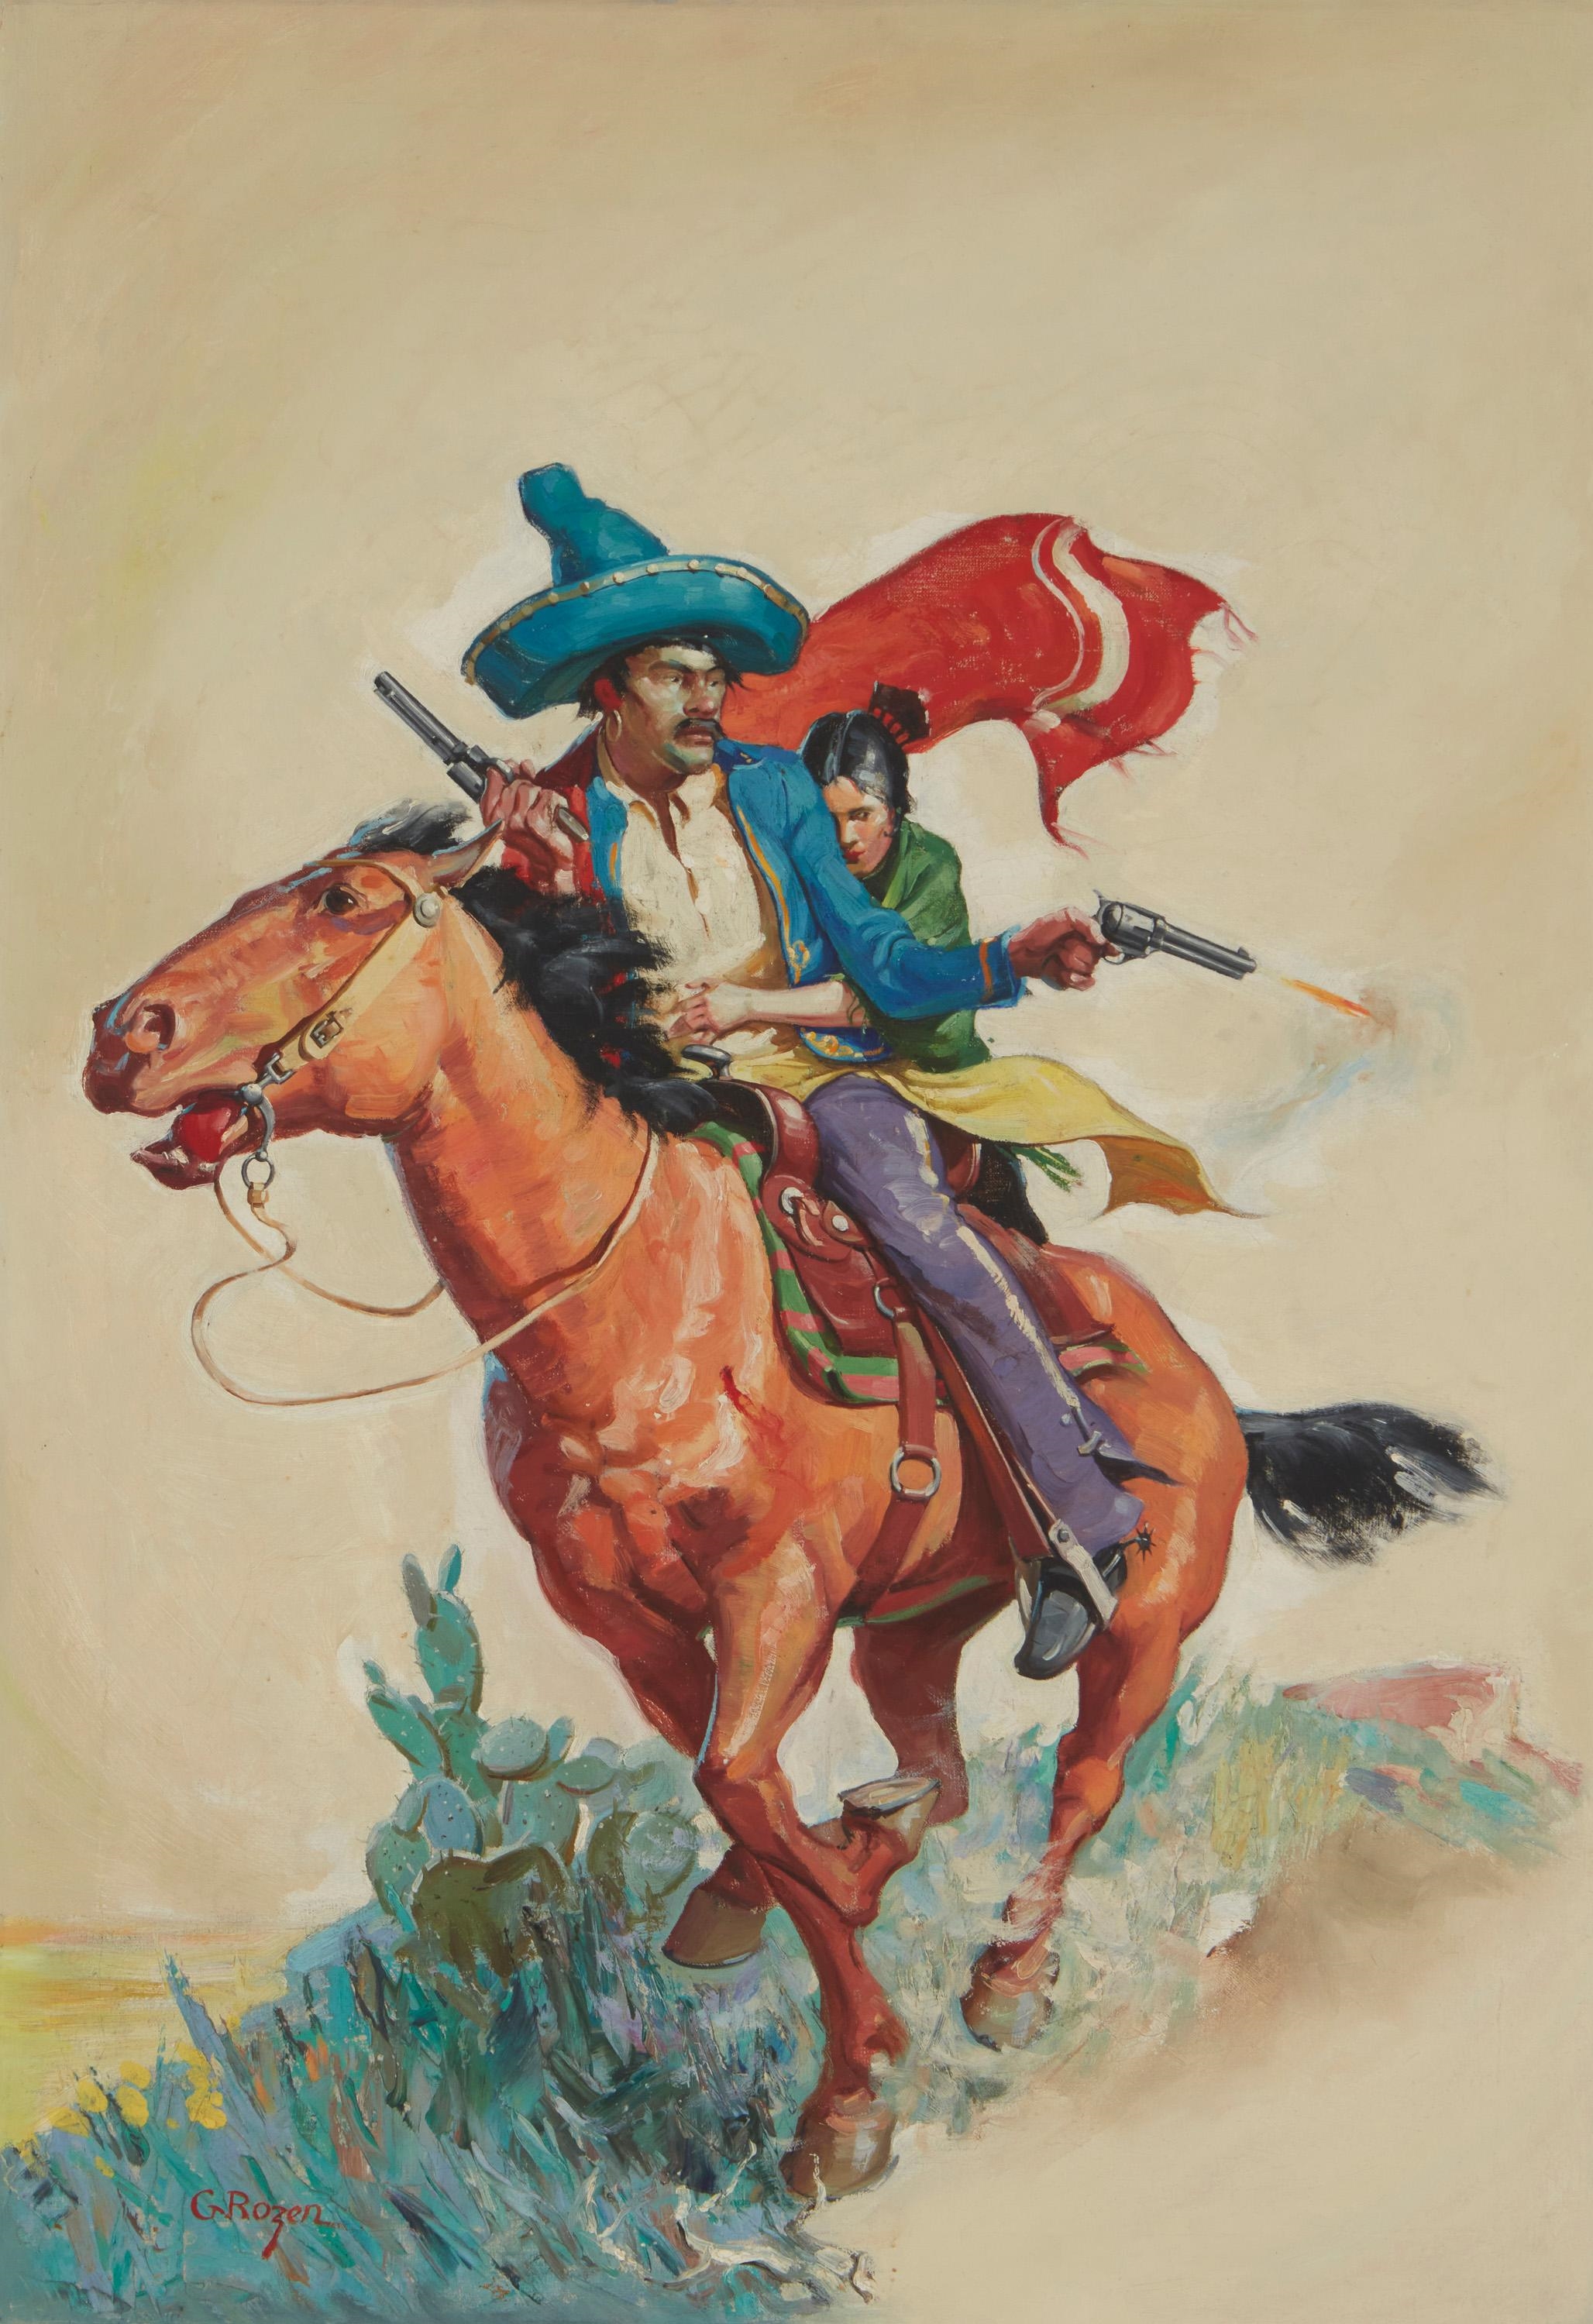 George Rozen  Pulp fiction magazine cover: Mexican vaquero with